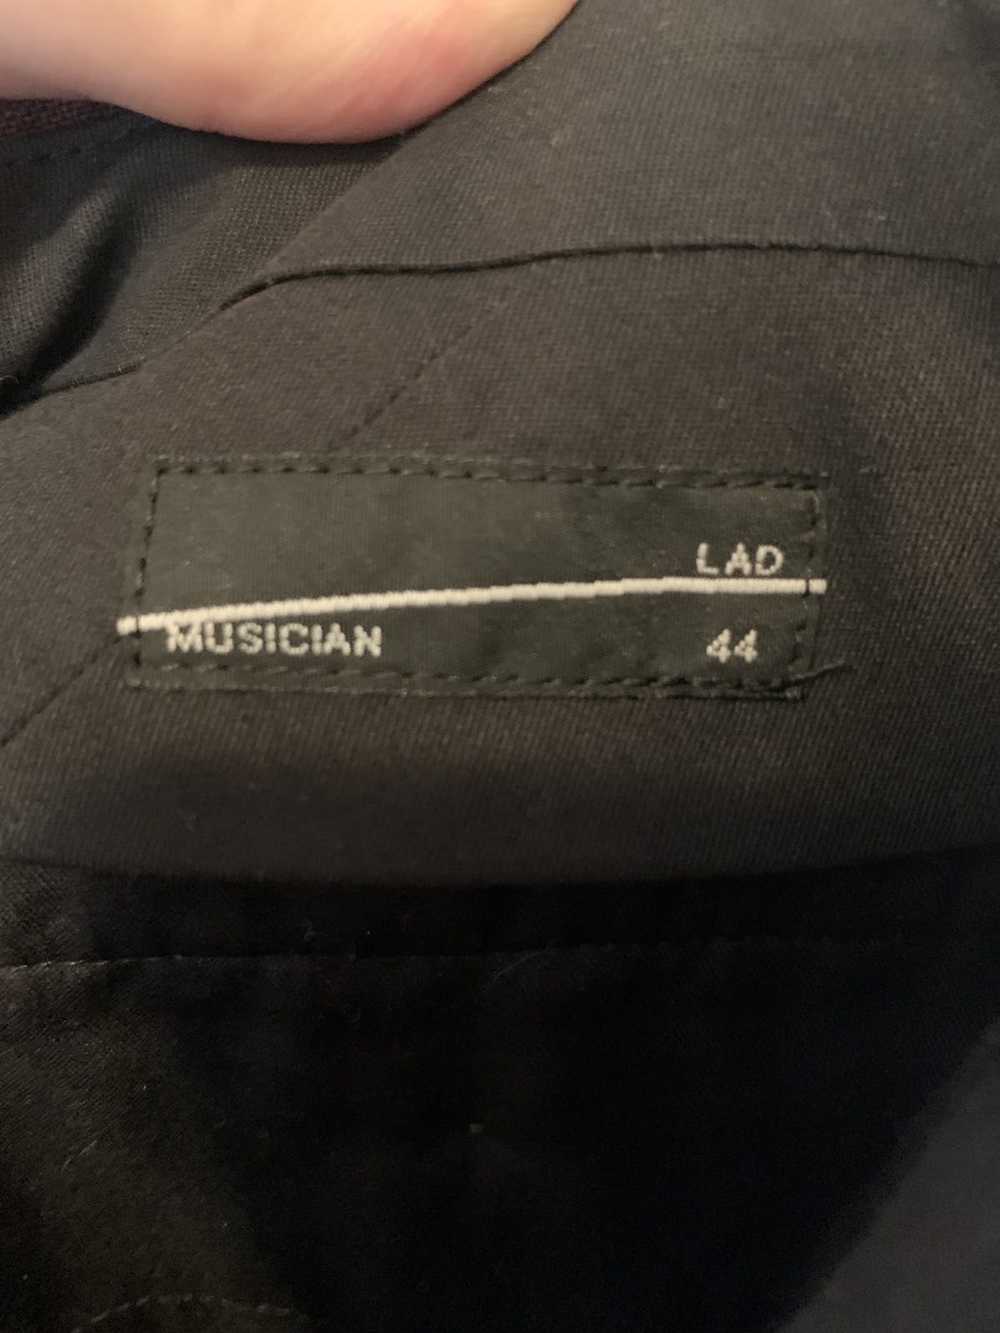 Lad Musician Linen Shorts - image 3